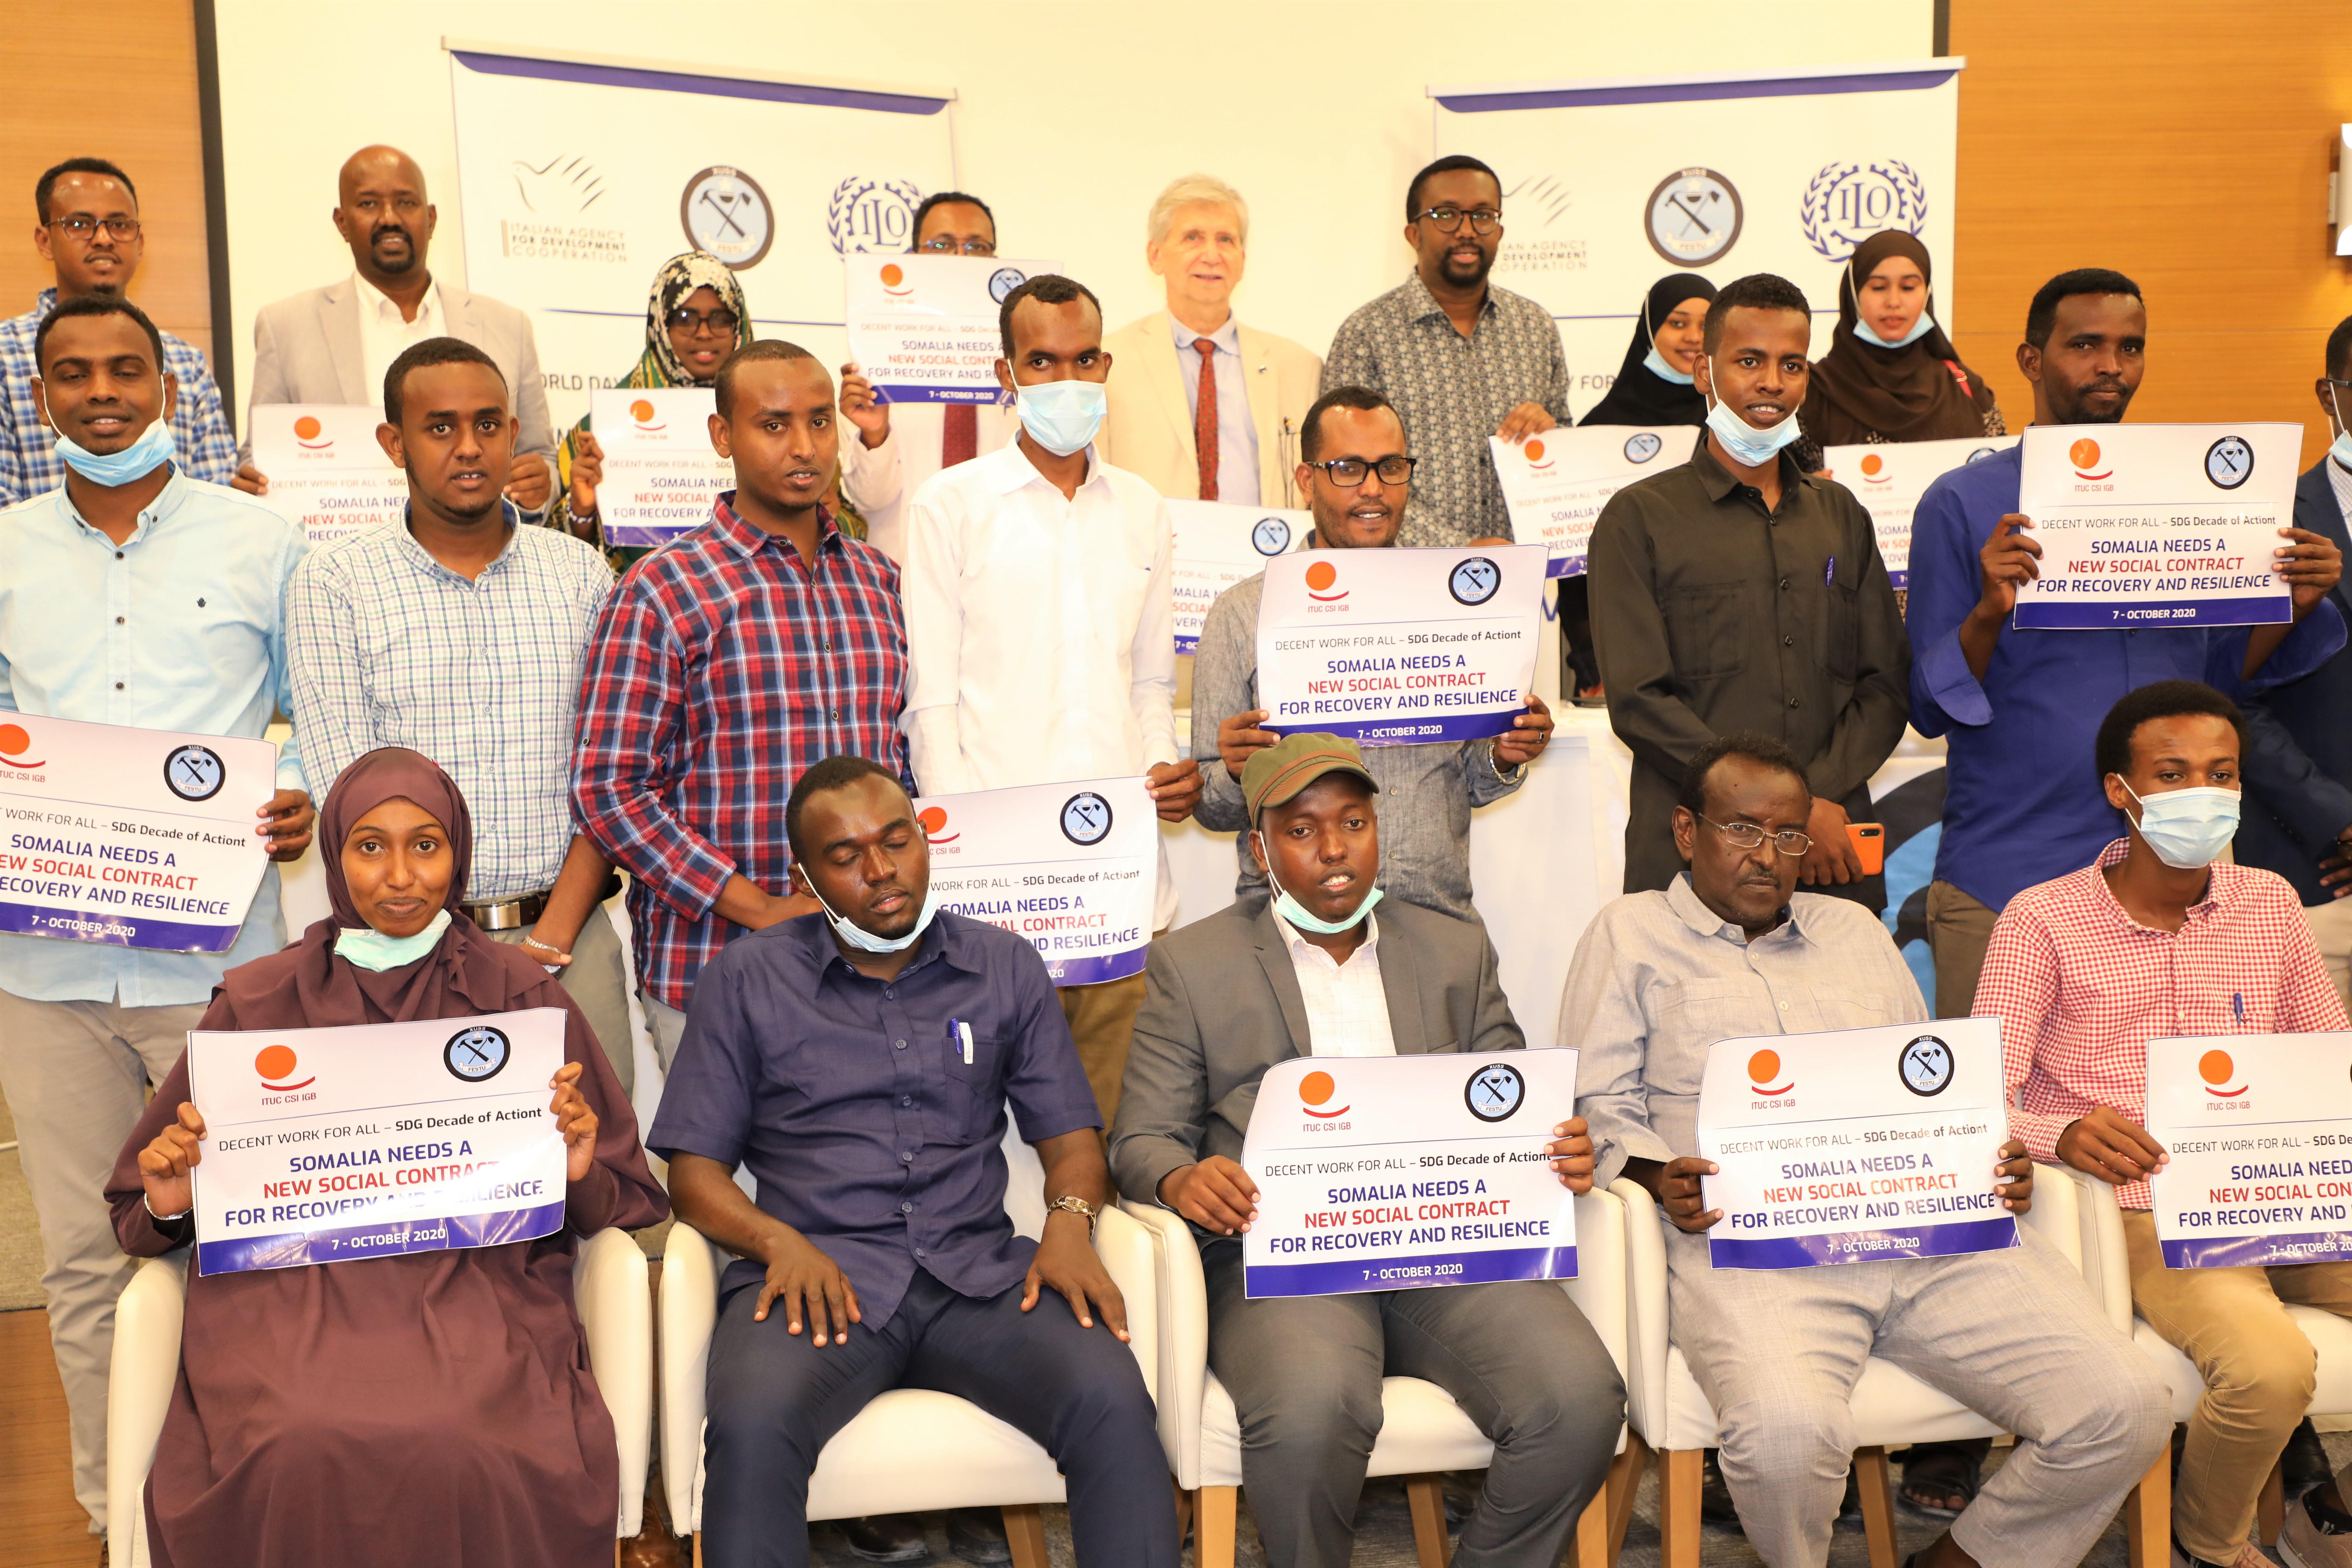 Conflict resolution jobs in somalia